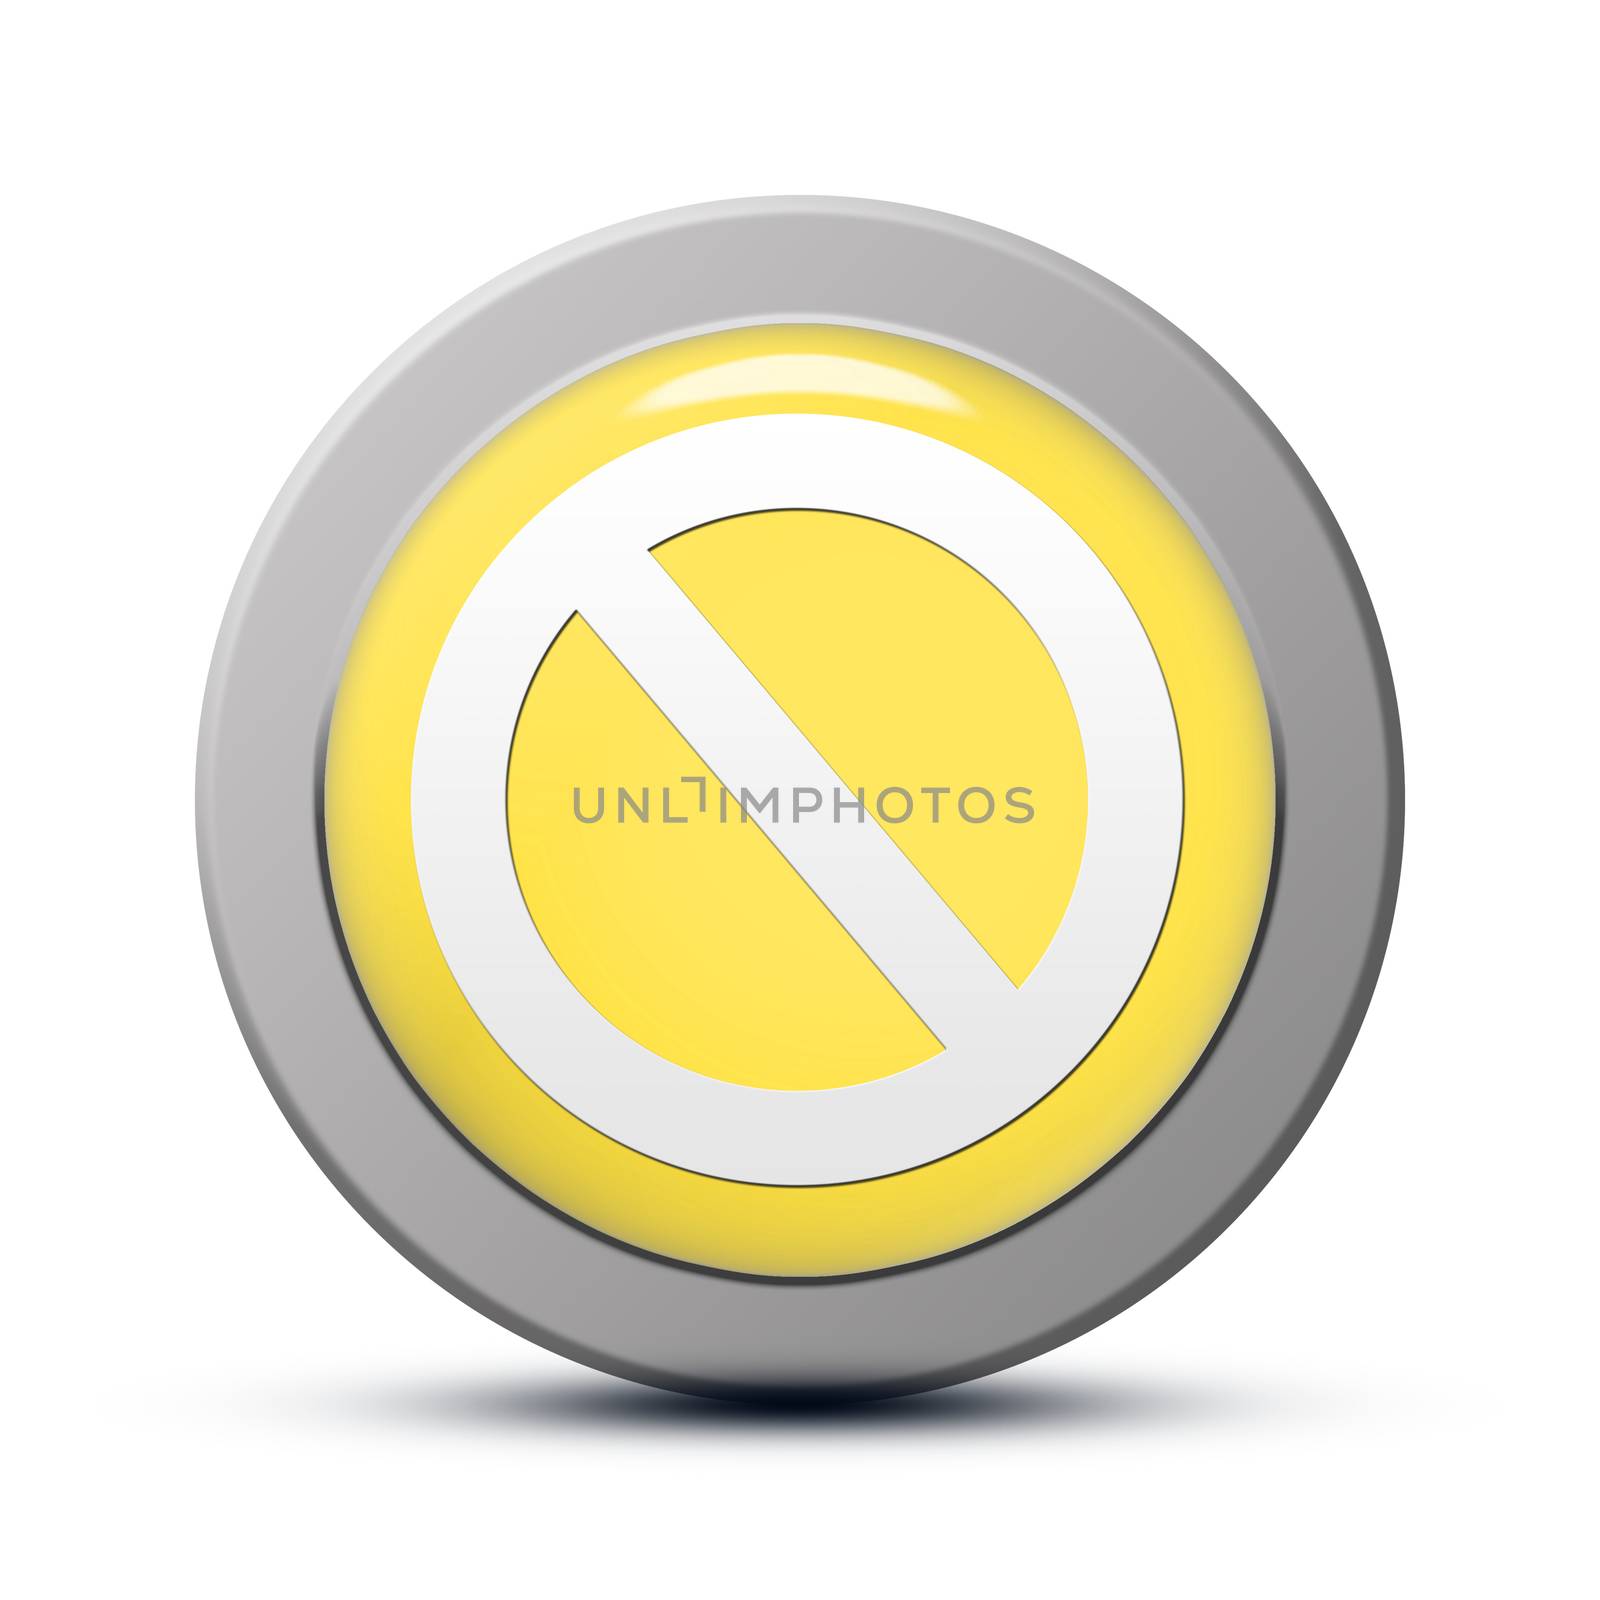 yellow round Icon series : Access denied button